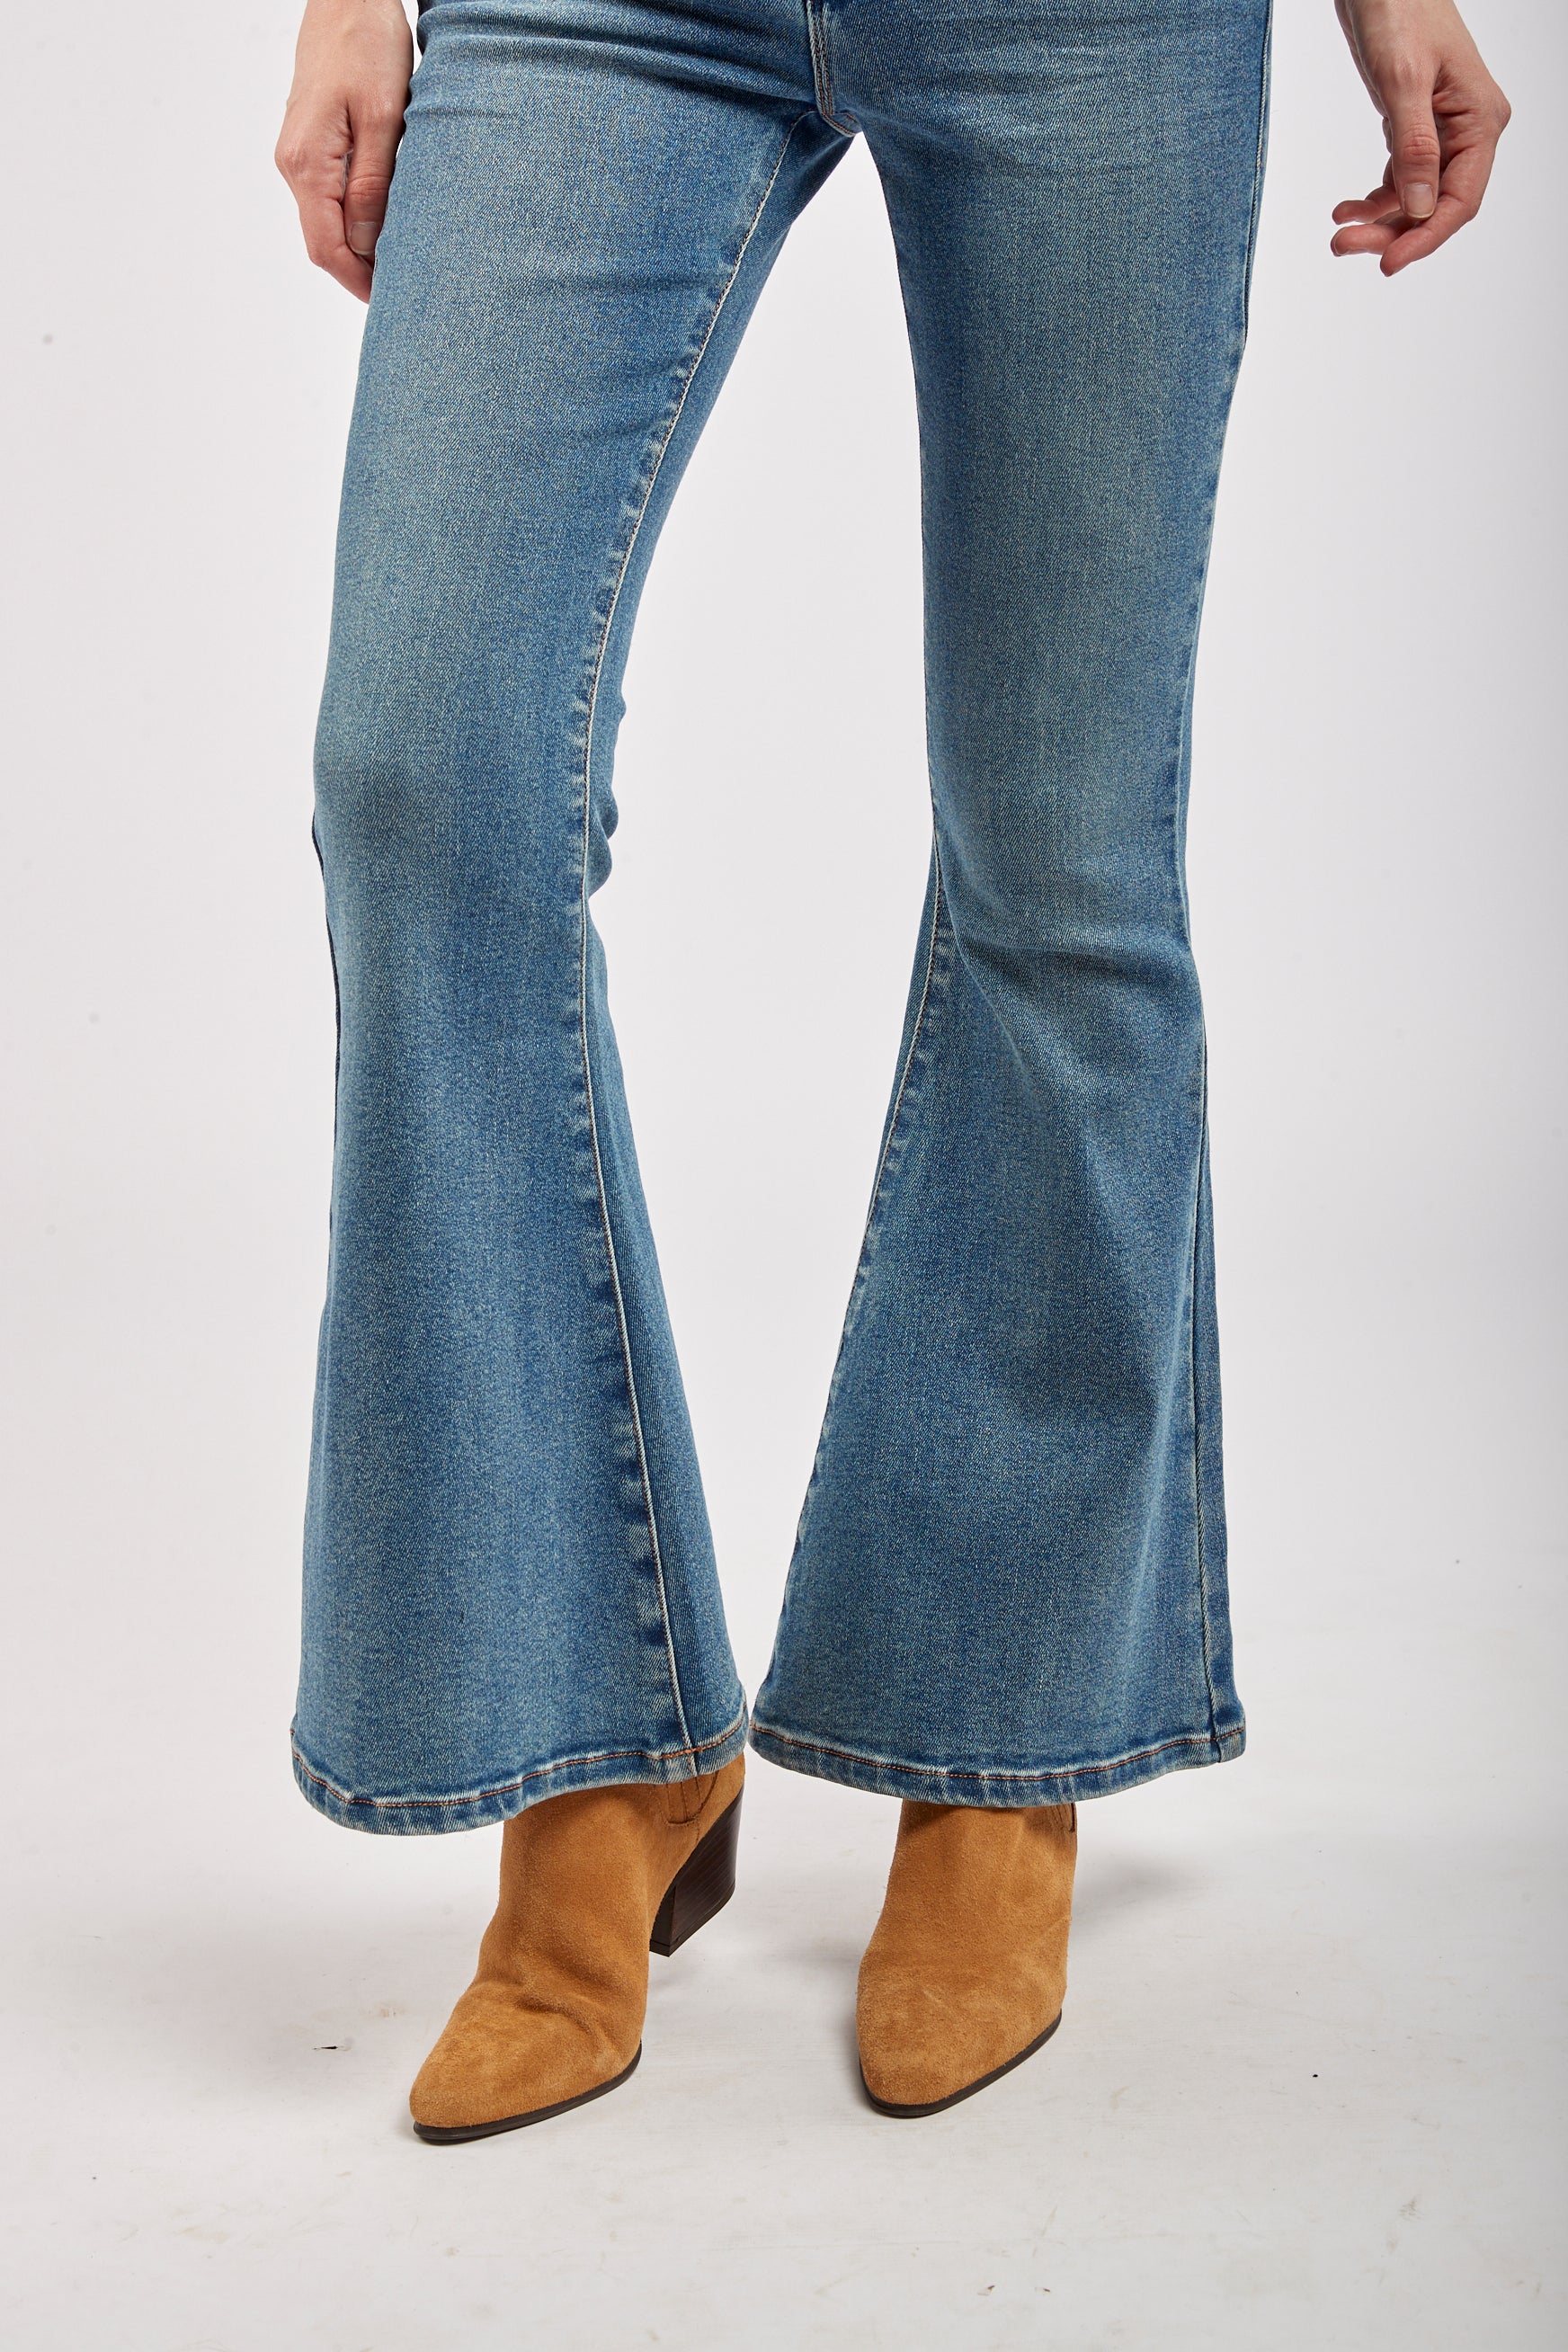 Elephant jeans - Yael